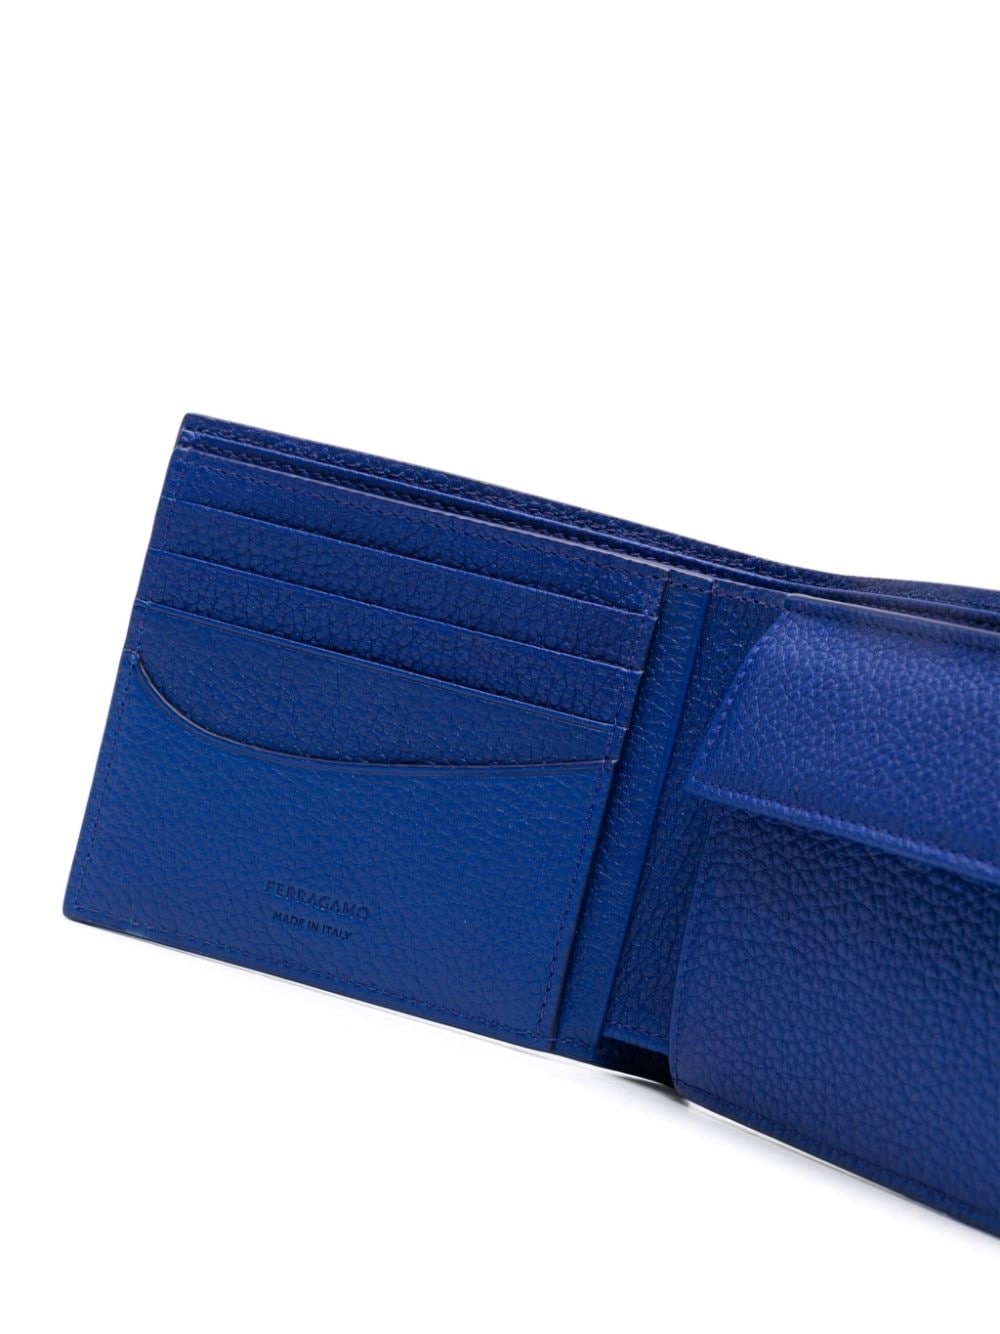 panelled bi-fold leather wallet - 3